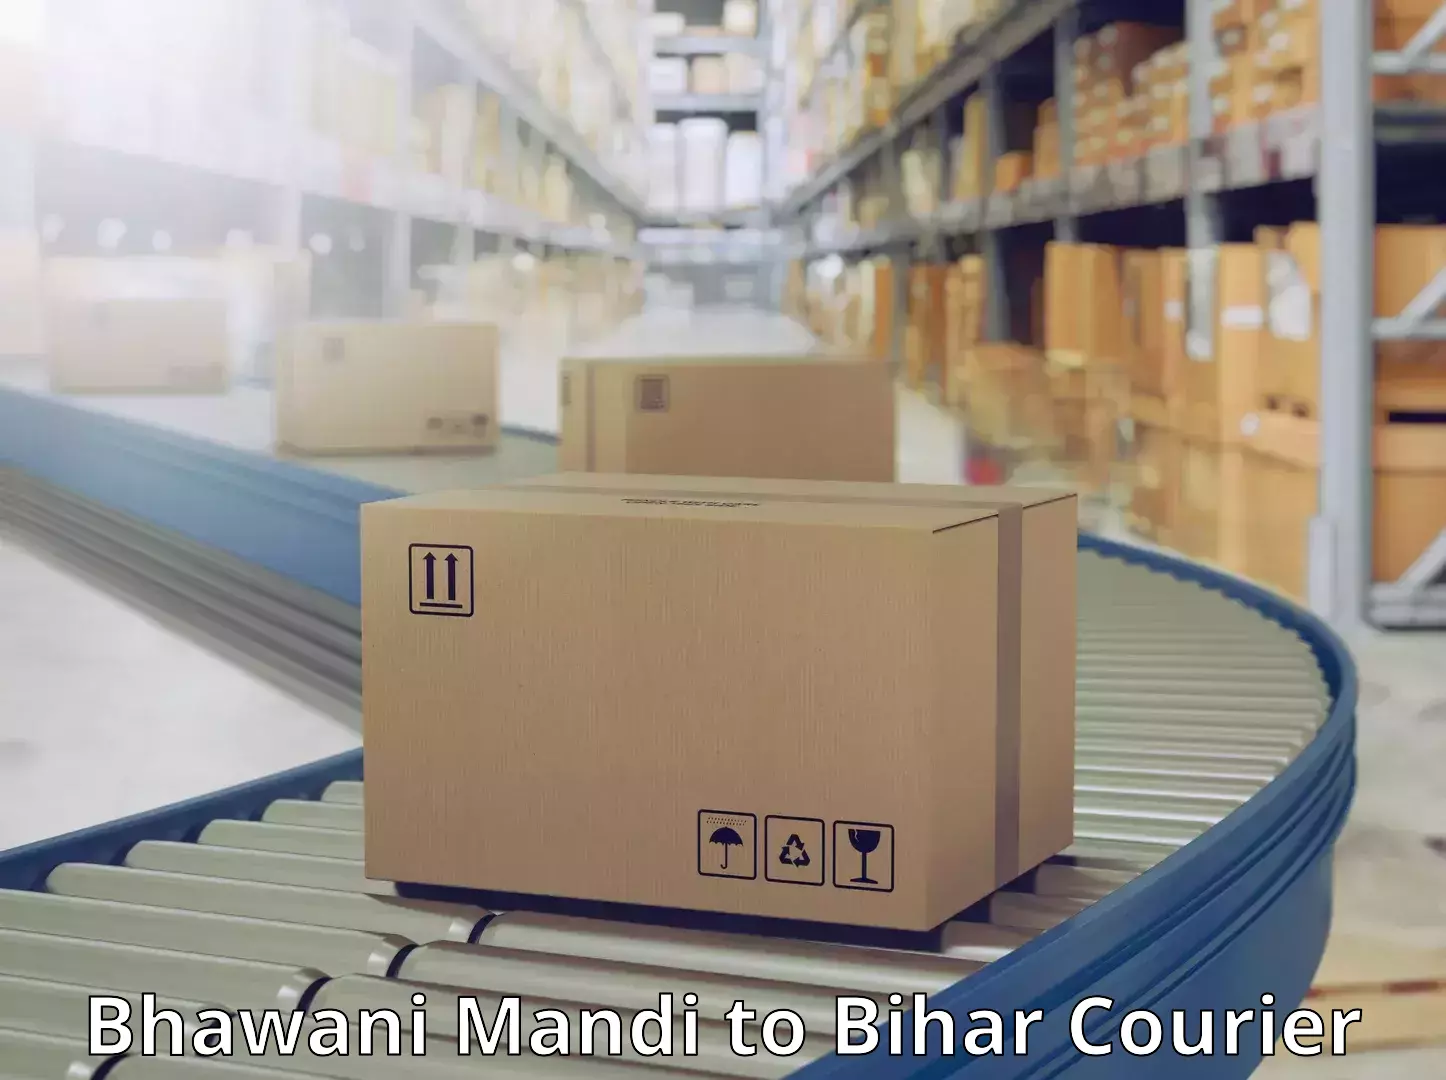 State-of-the-art courier technology Bhawani Mandi to Bihar